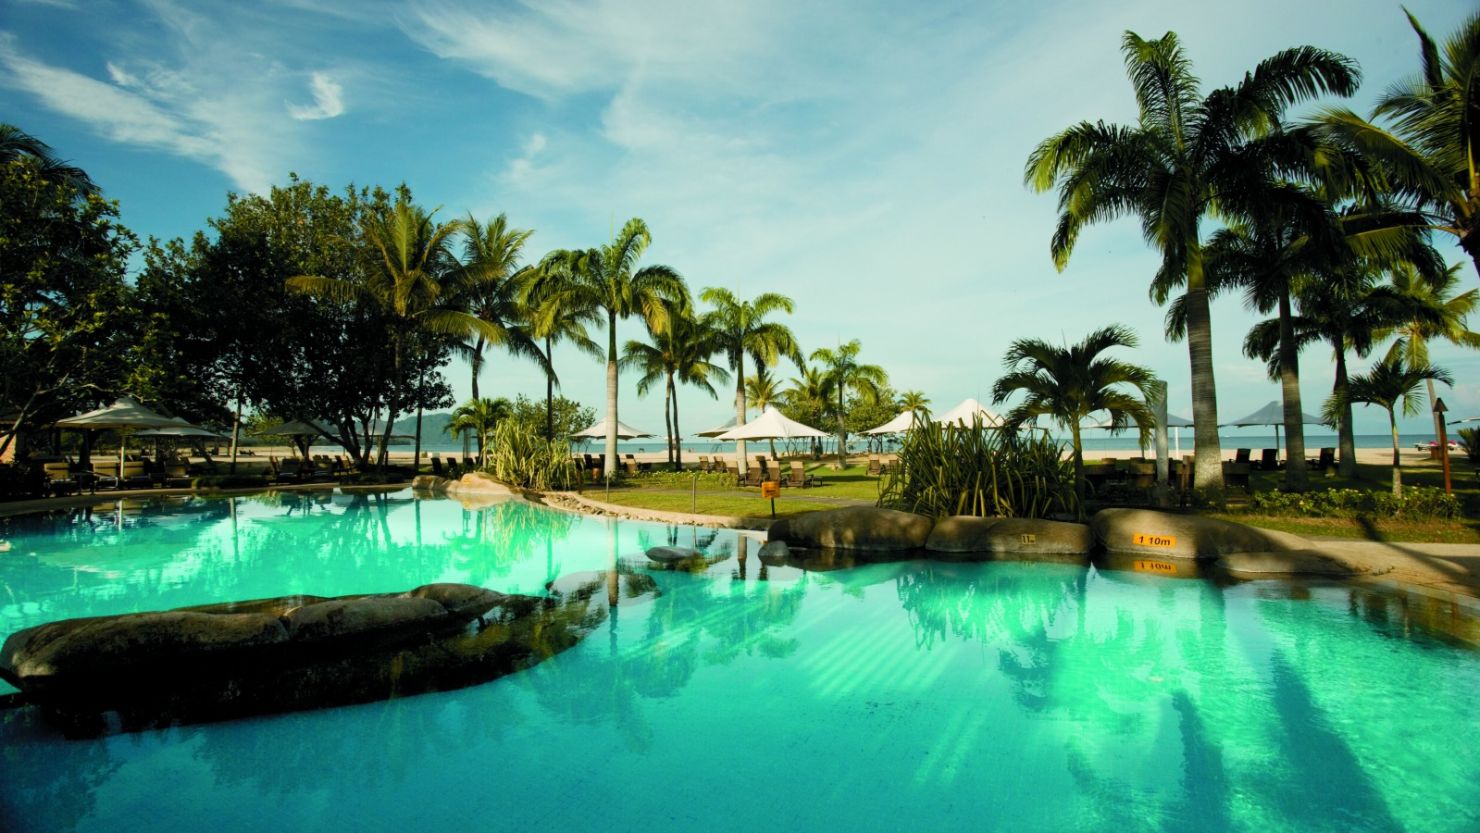 The Shangri La Rasa Ria -- palm fronds, pool and plenty of pale sand.